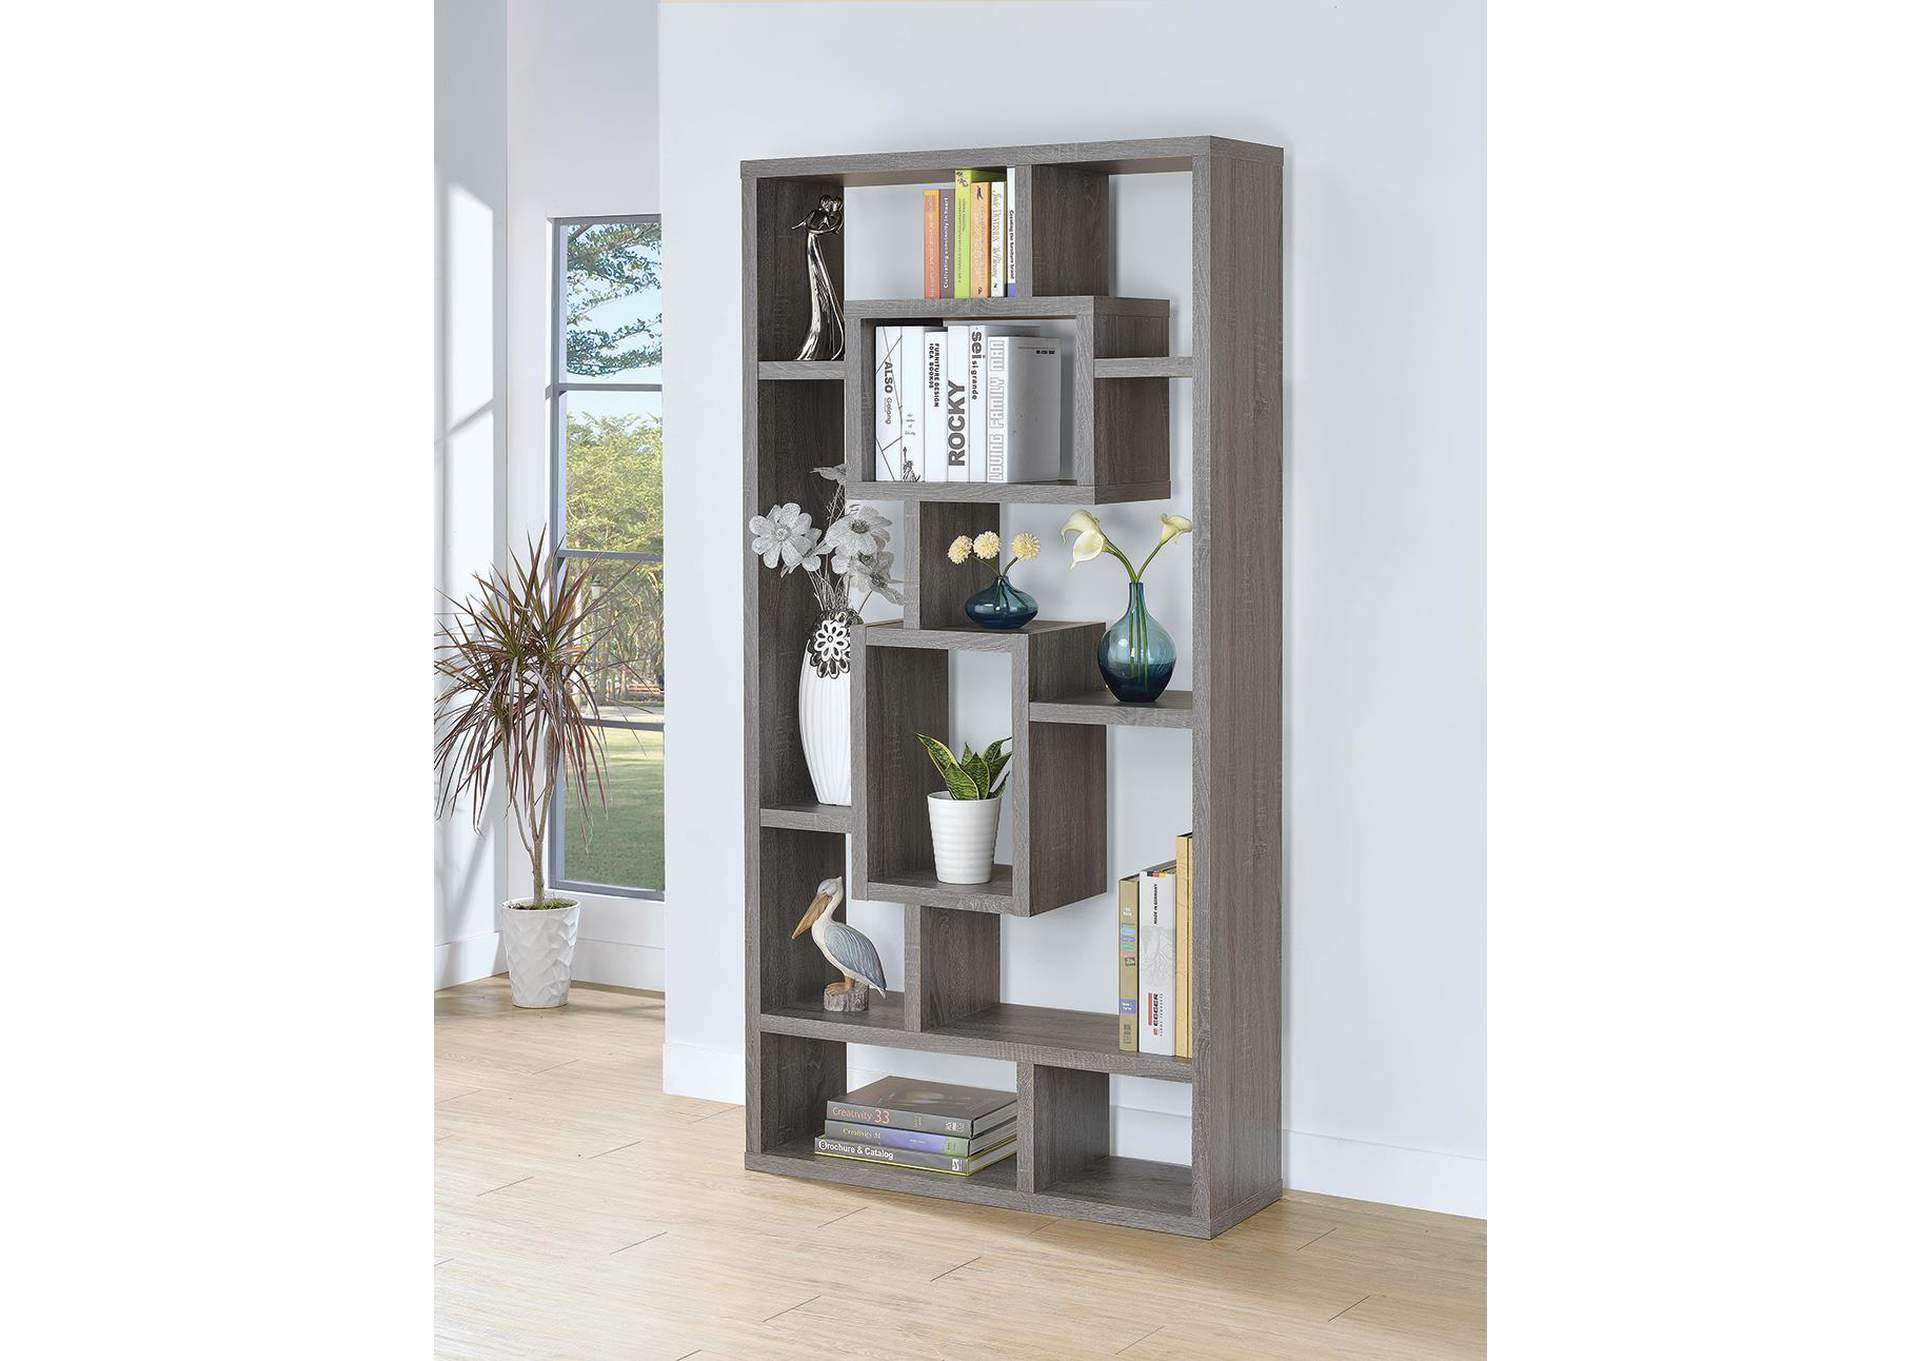 Howie 10-shelf Bookcase Weathered Grey,Coaster Furniture